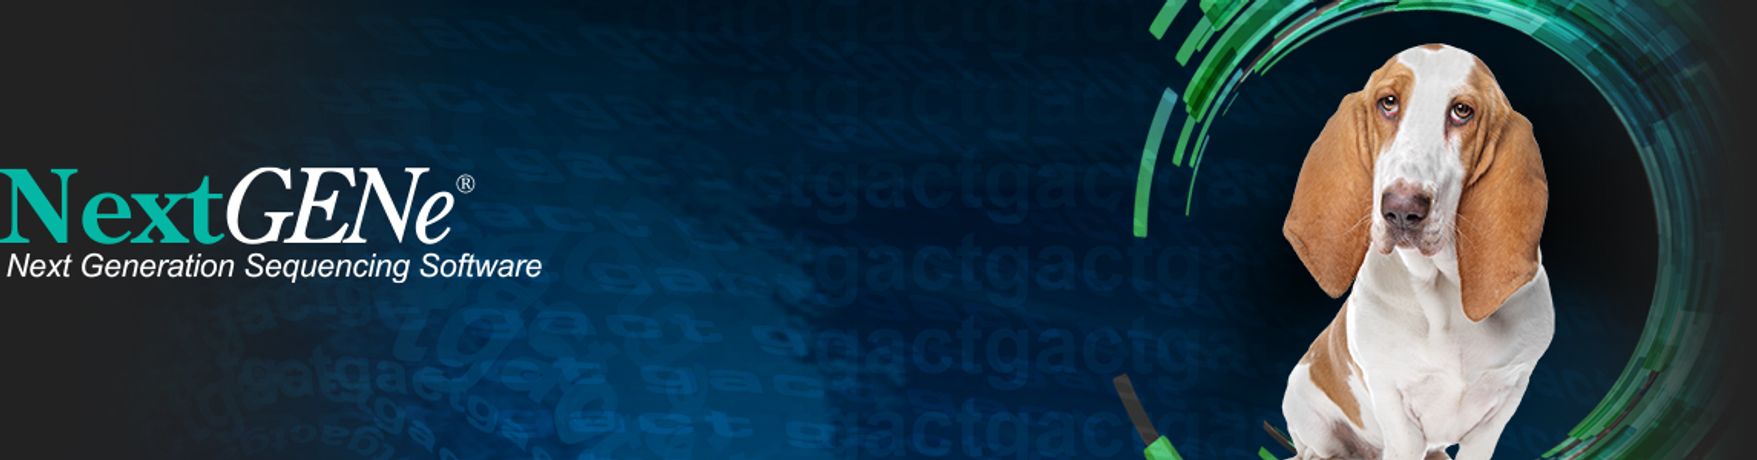 NextGENe - Next Generation Sequencing Software